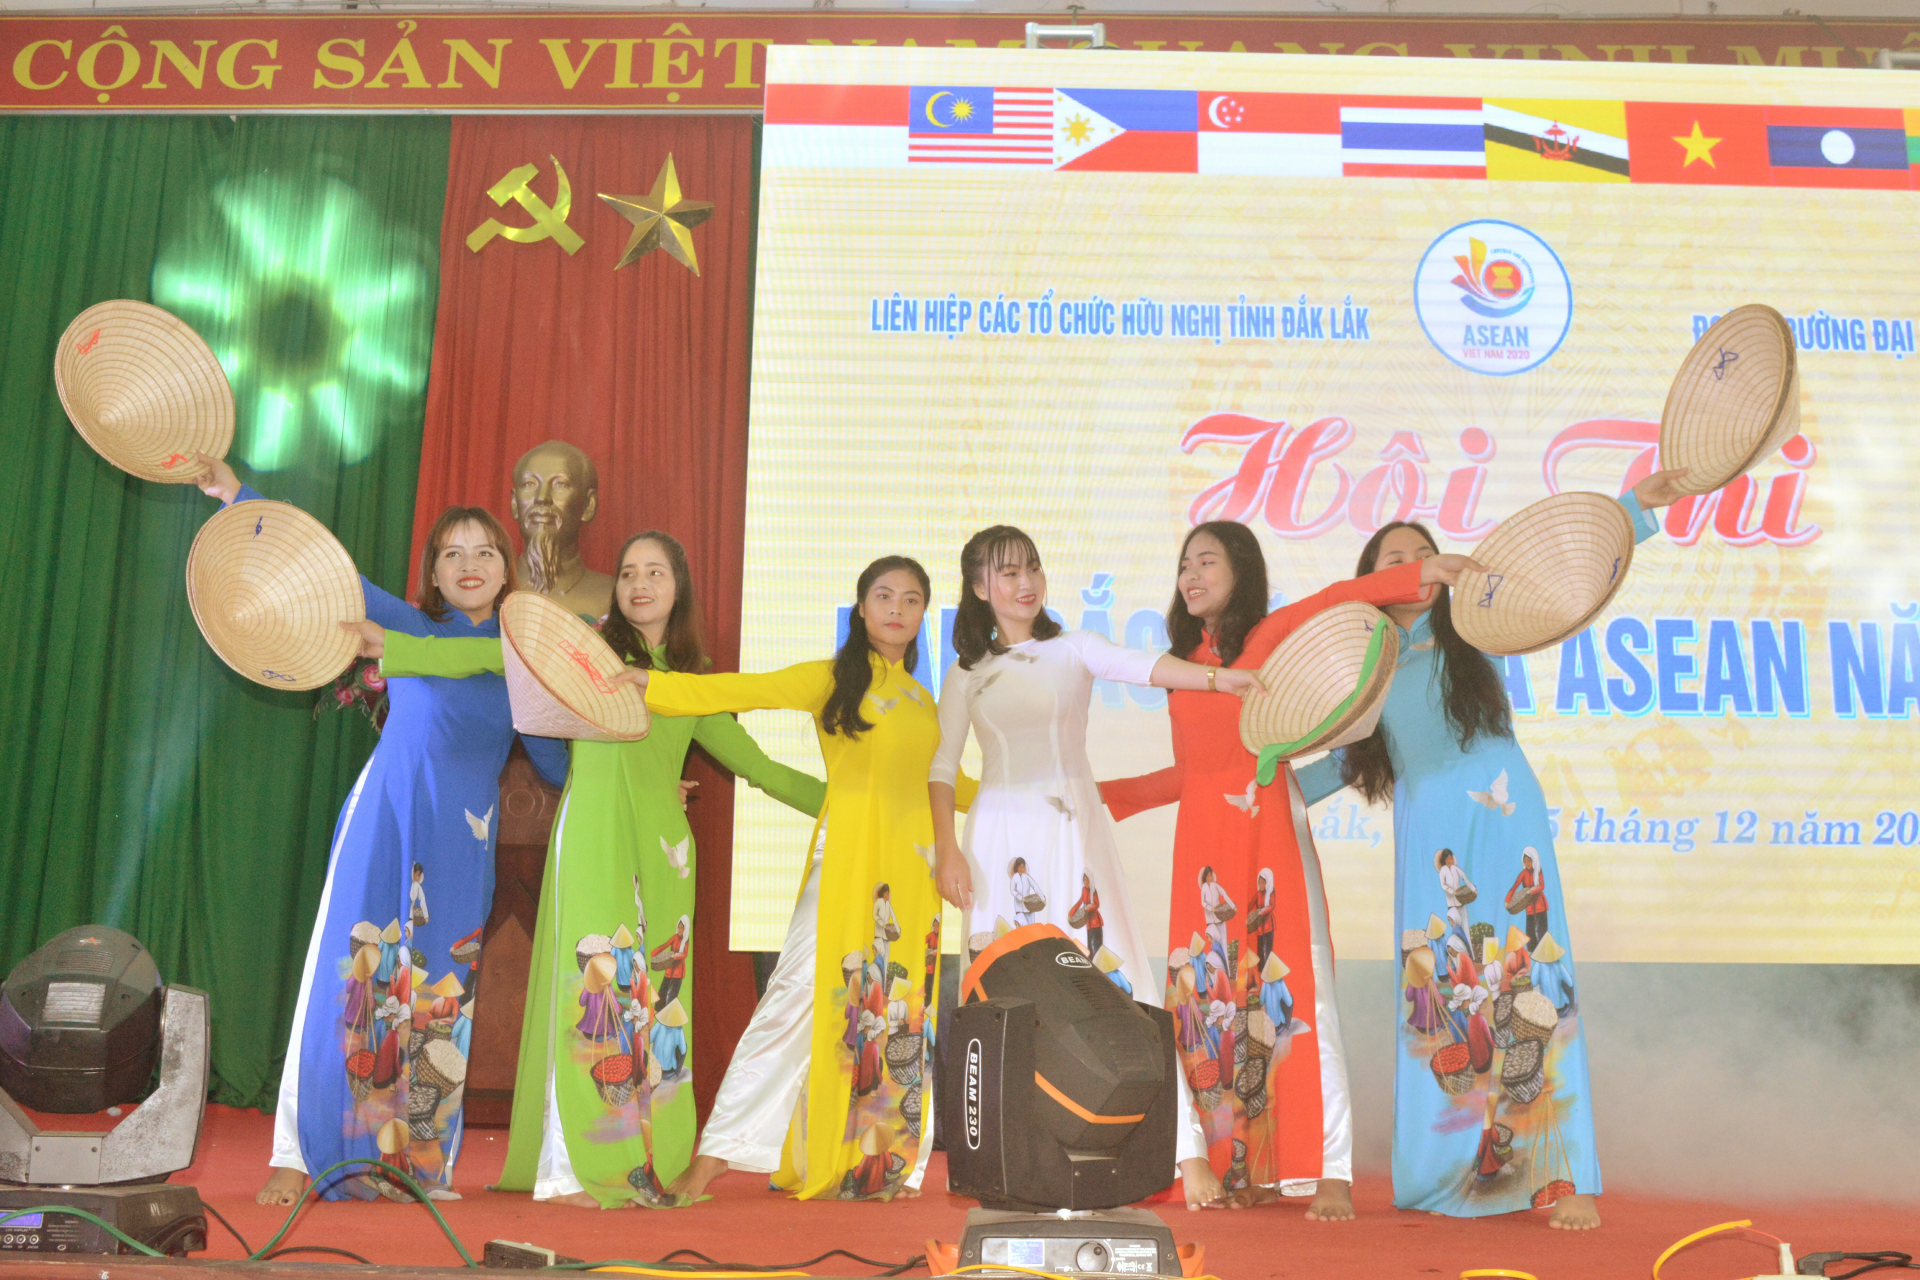 asean cultural identity contest 2020 held in dak lak